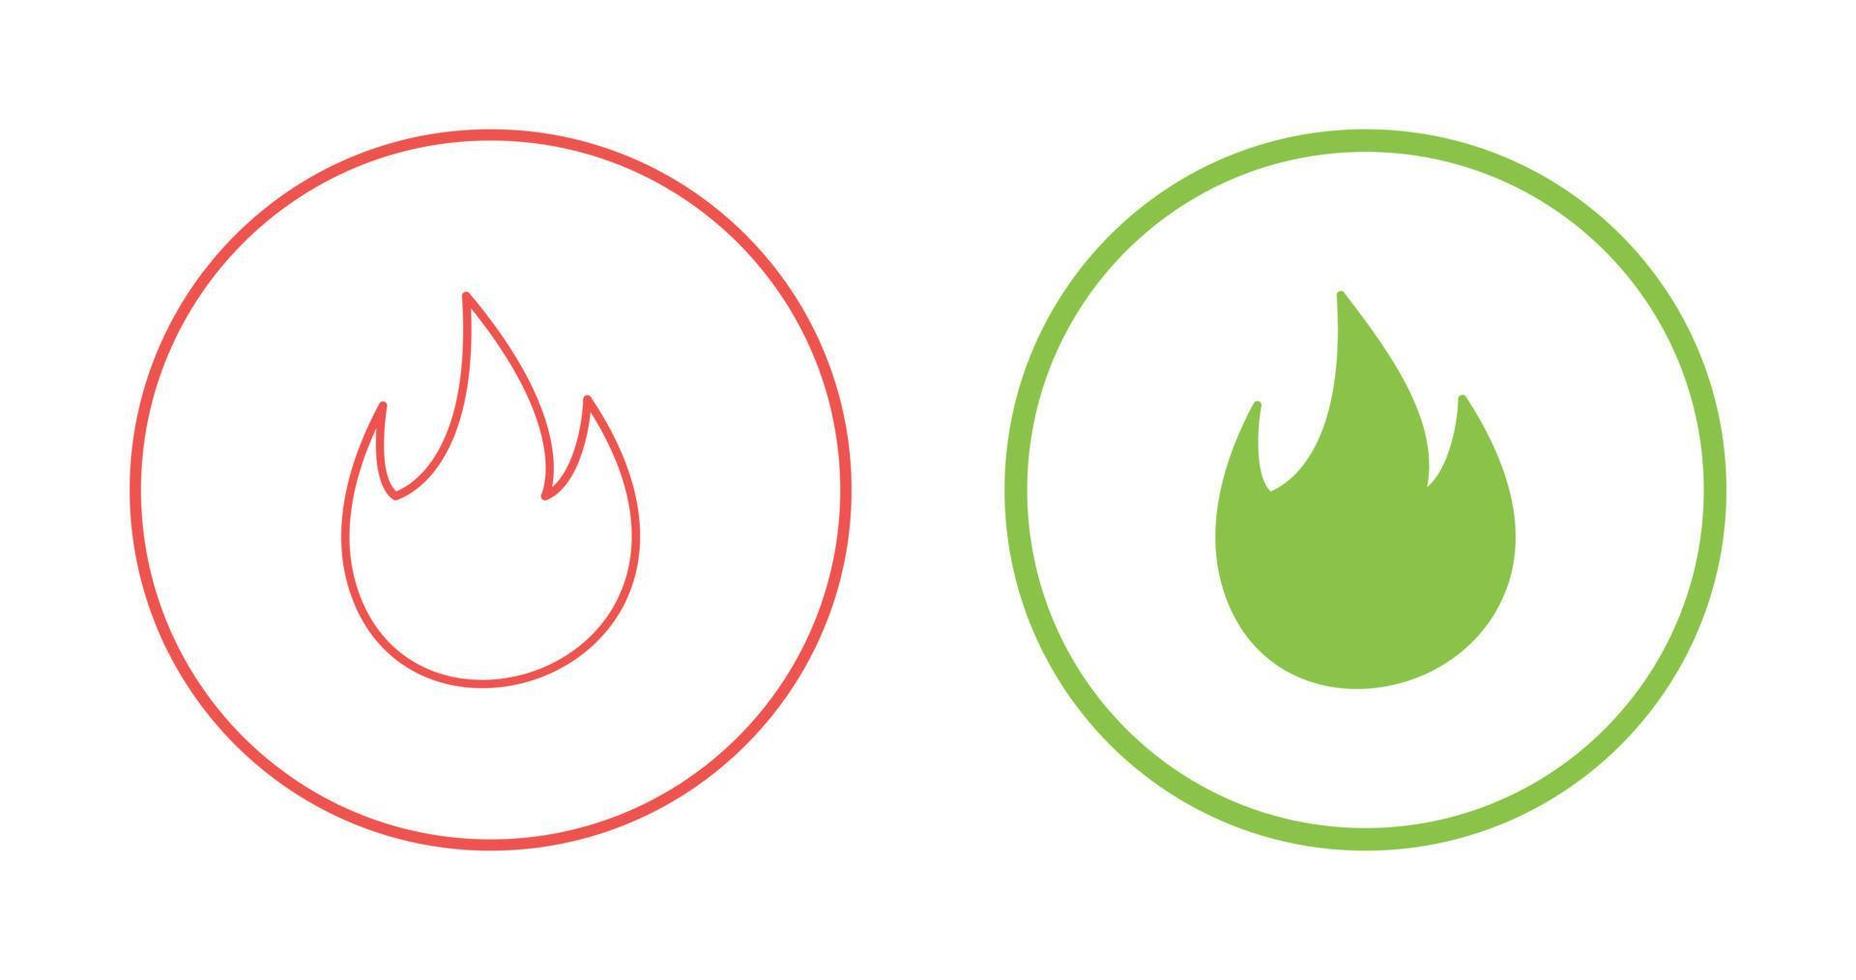 Fire Vector Icon